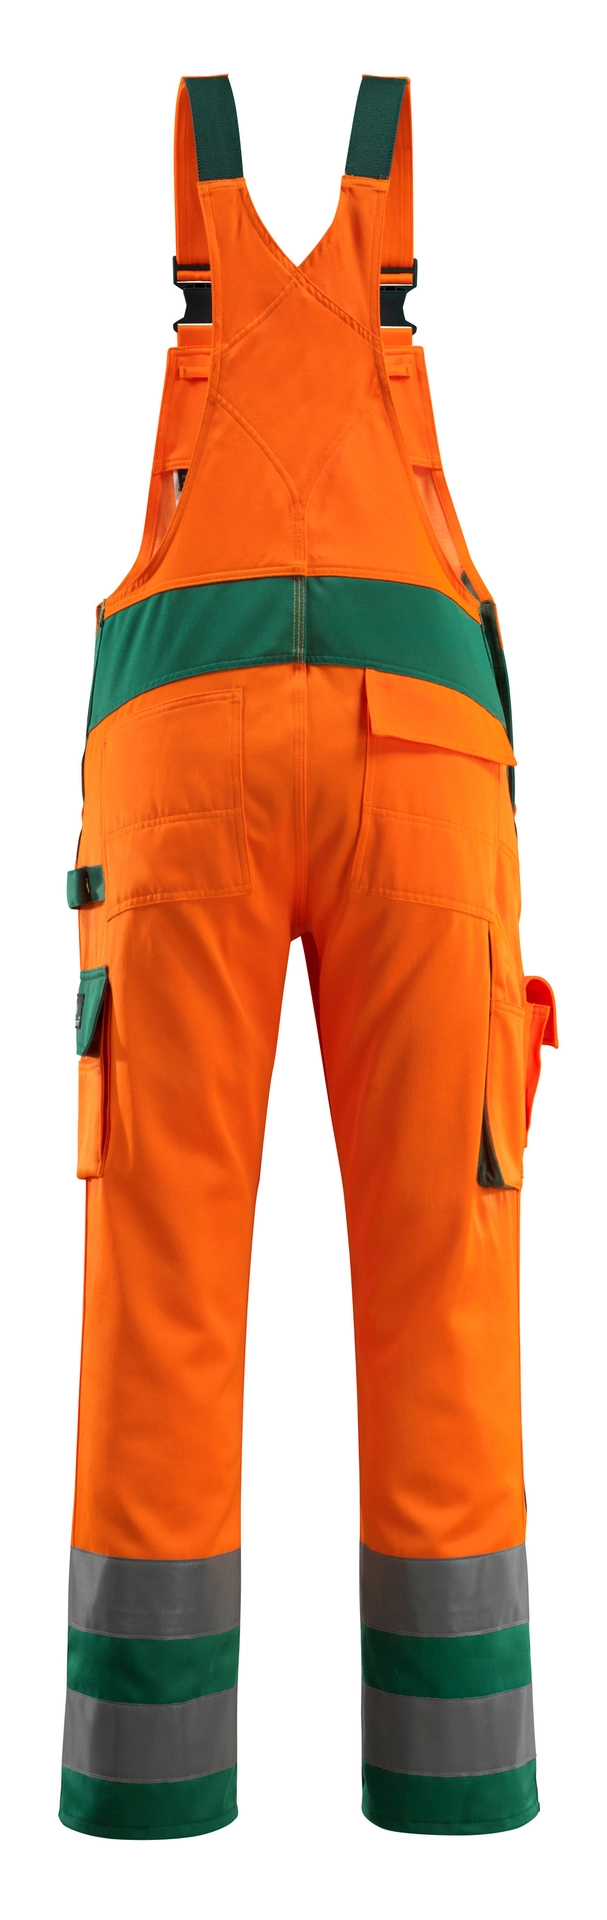 MASCOT® Barras Latzhose Größe 82C46, hi-vis orange/grün